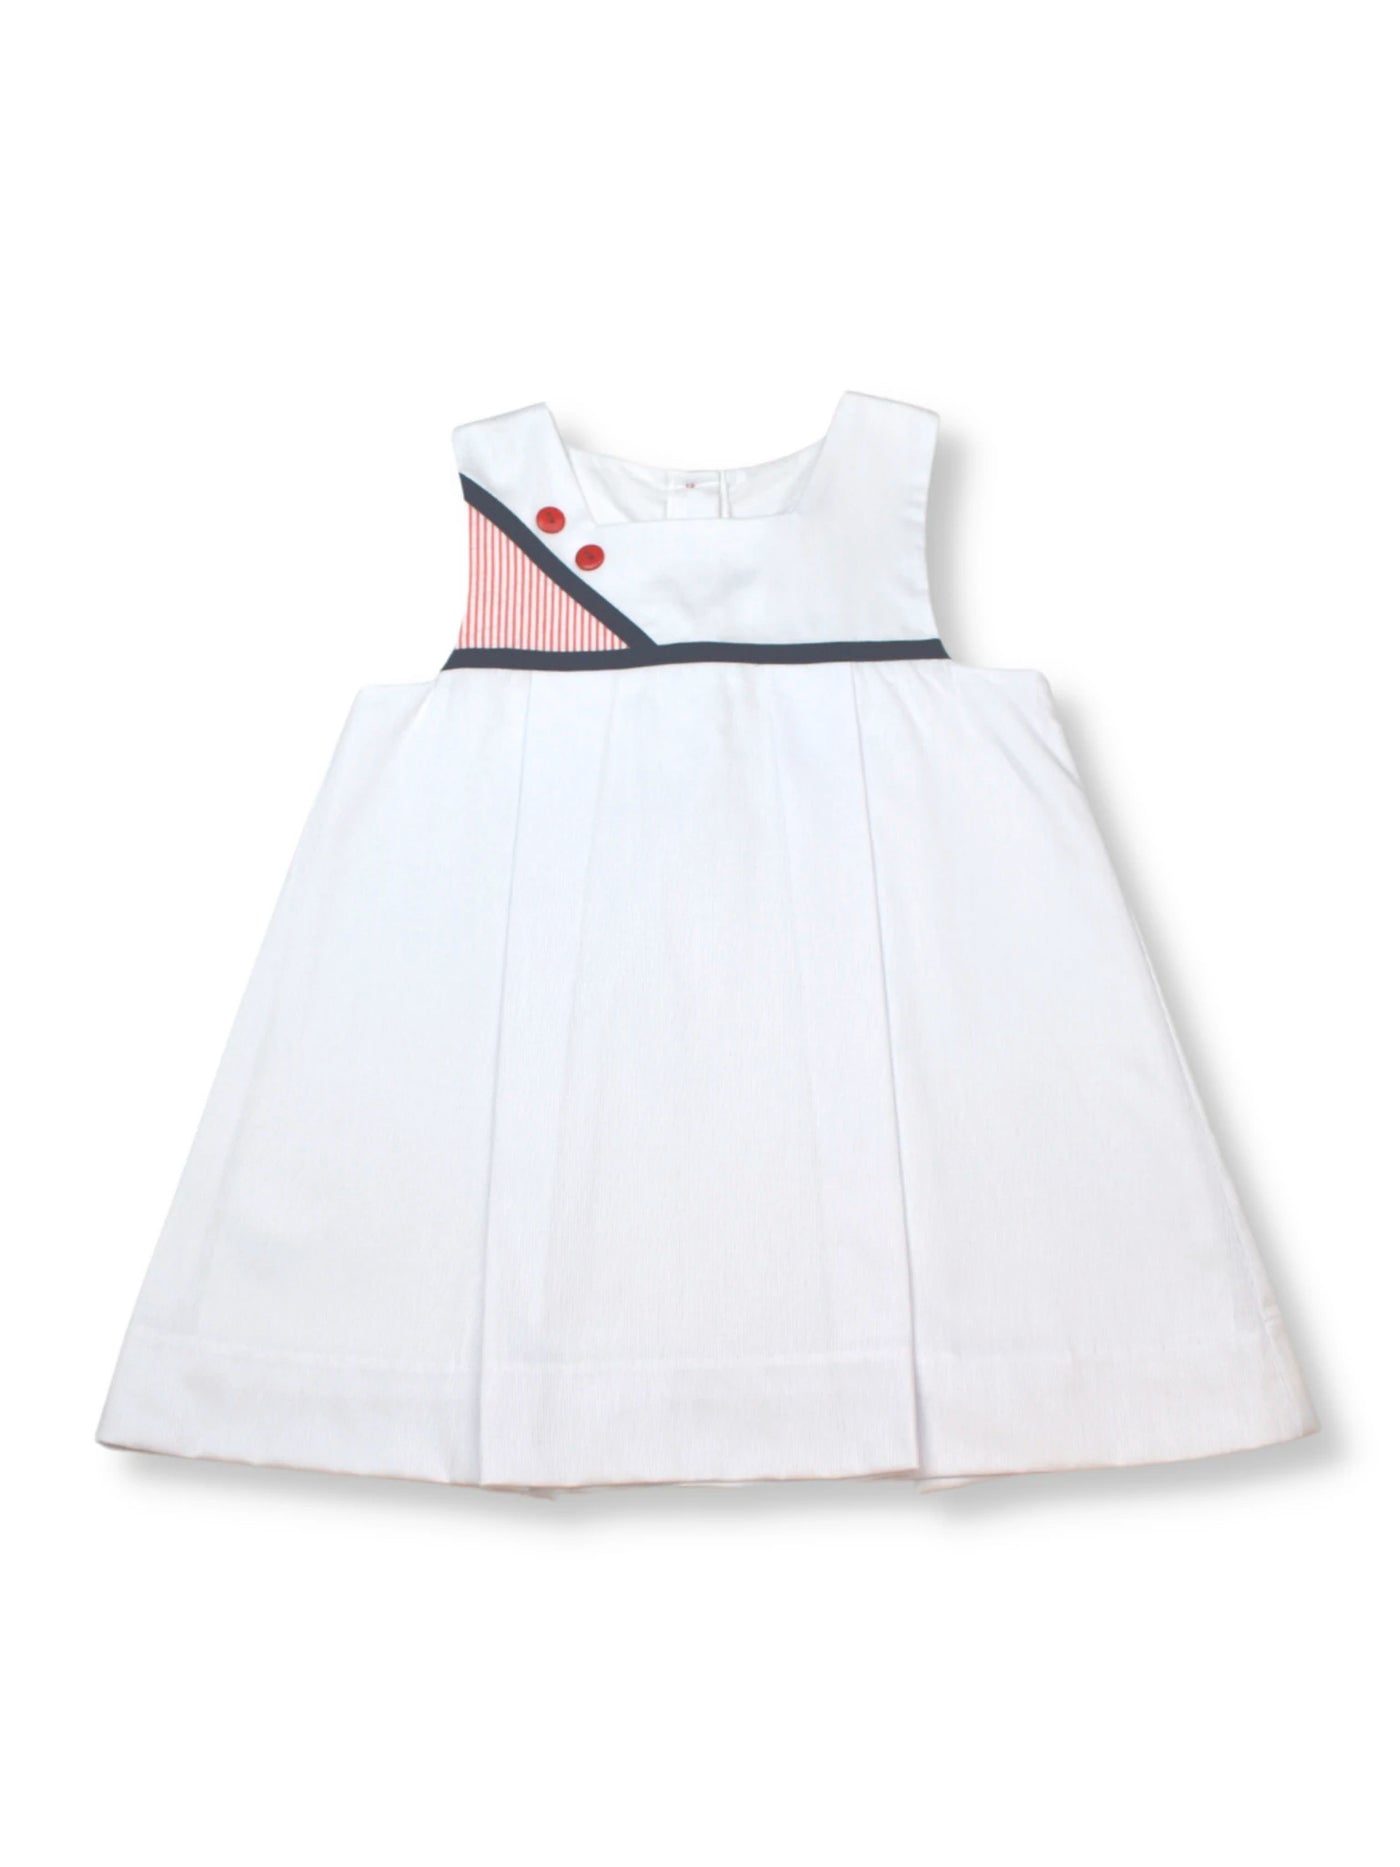 Kara Dress - Nautical White with Navy